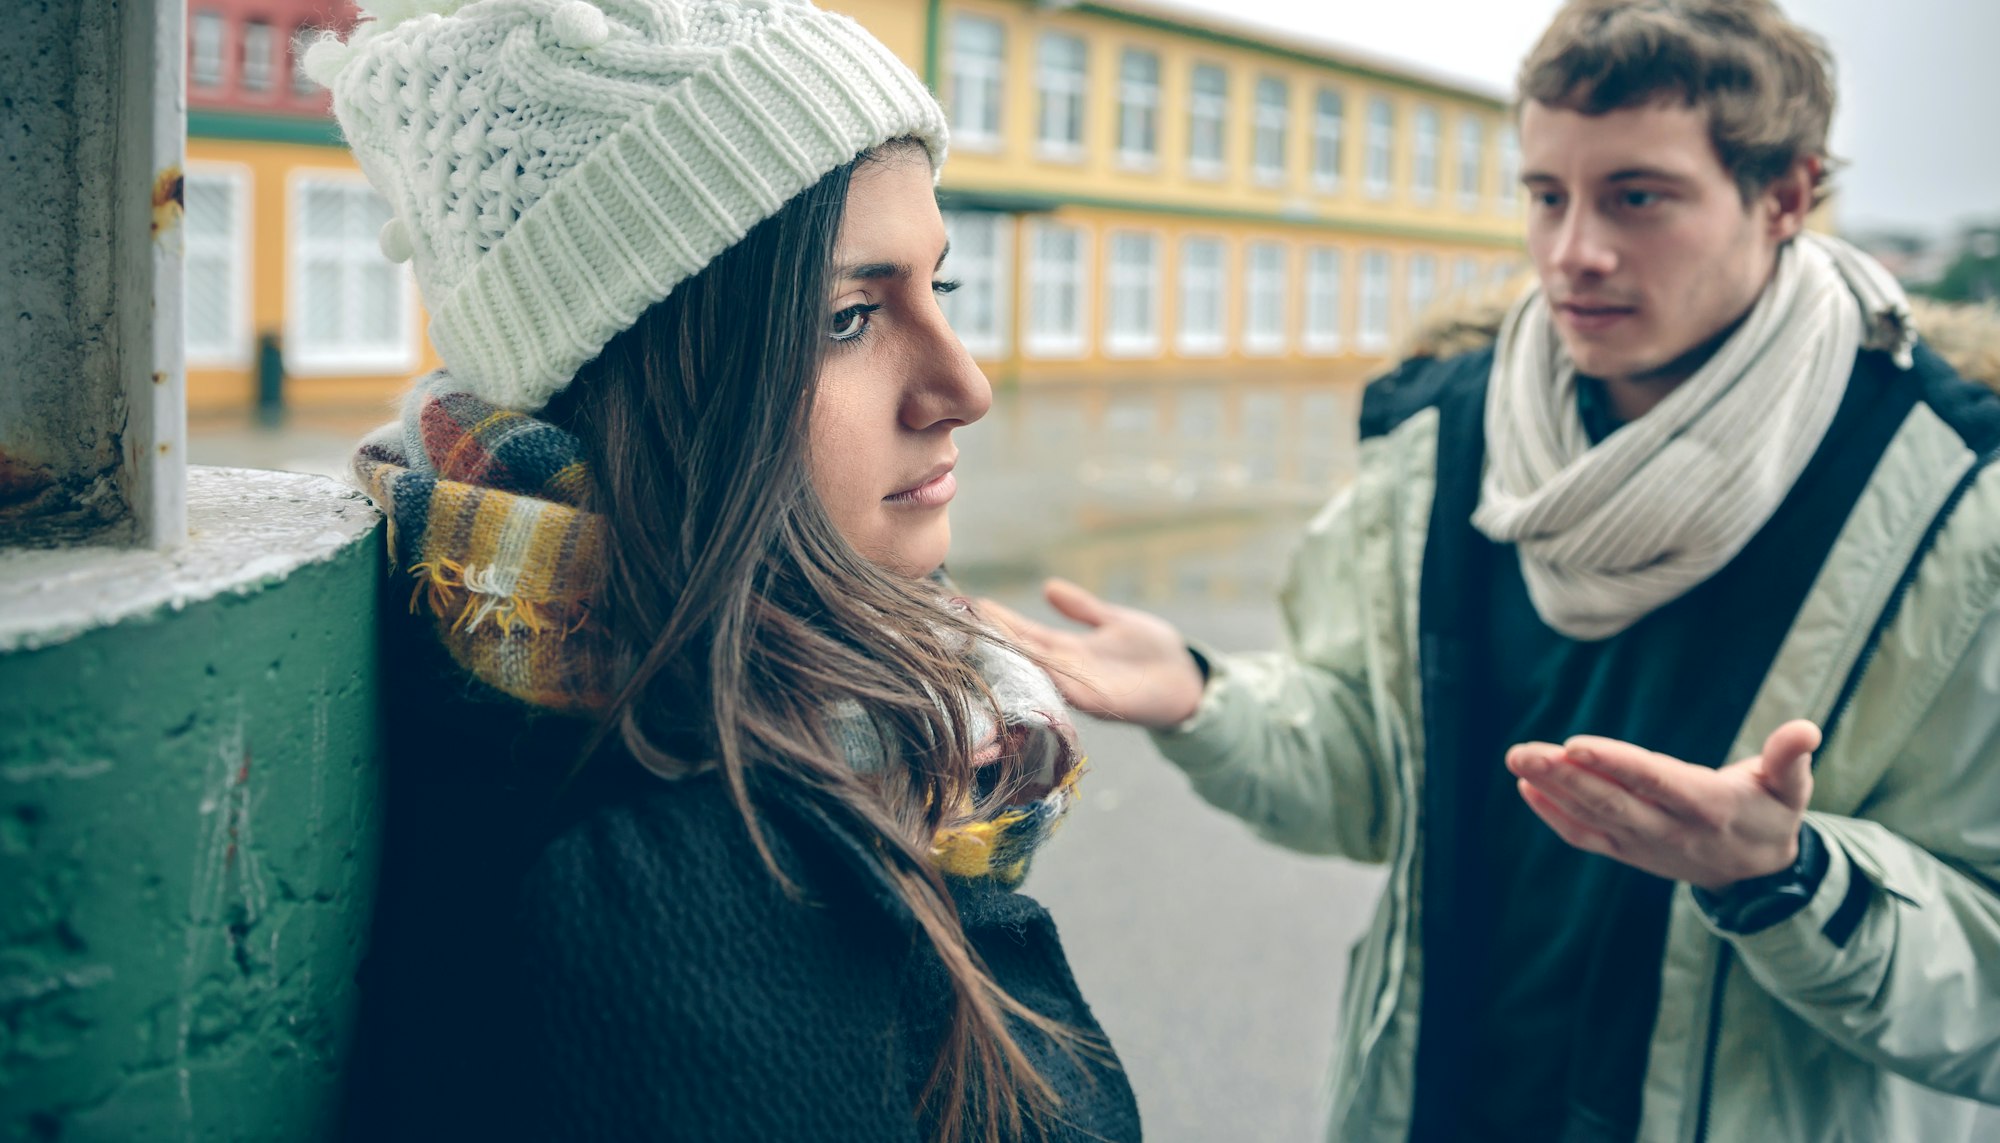 Displeased woman listening arguments of man in quarrel